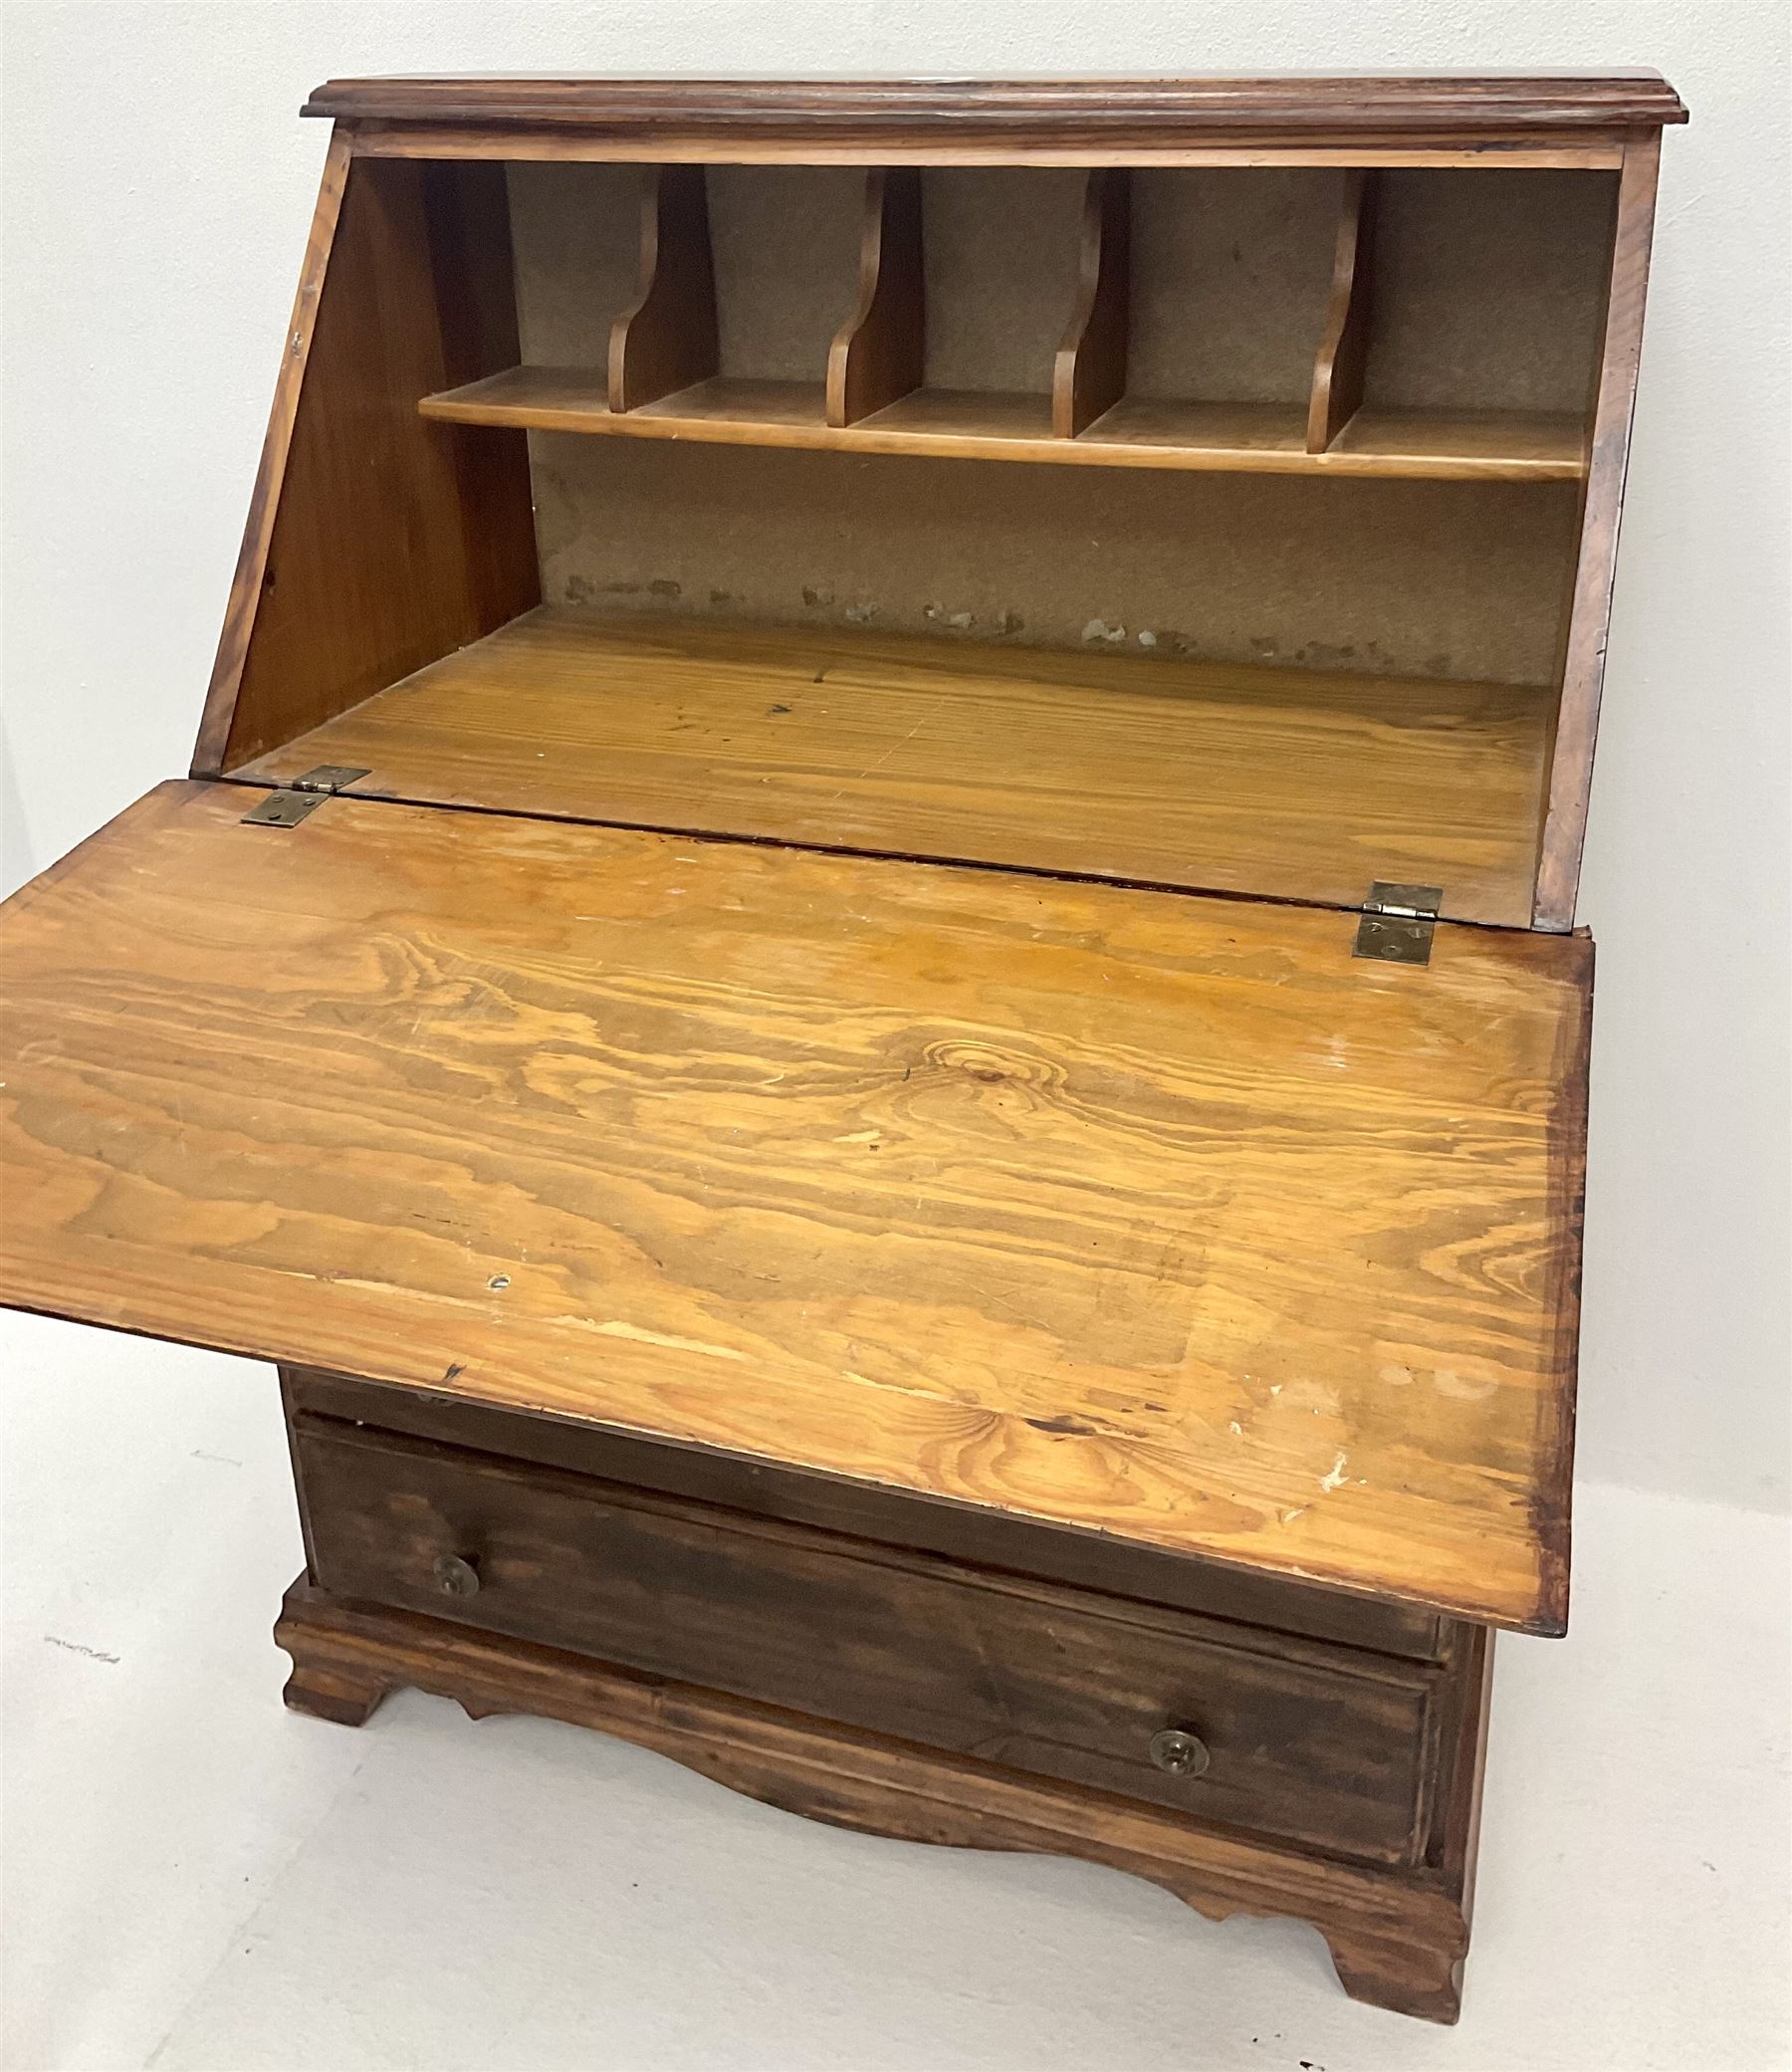 Hardwood bureau desk - Image 3 of 3